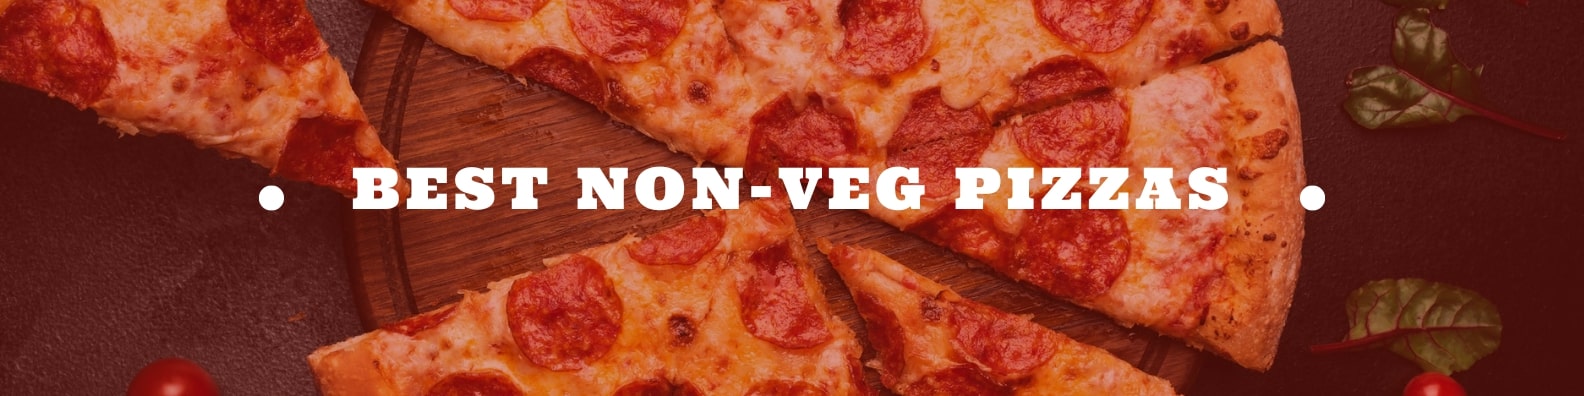 Best Non-Veg Pizza